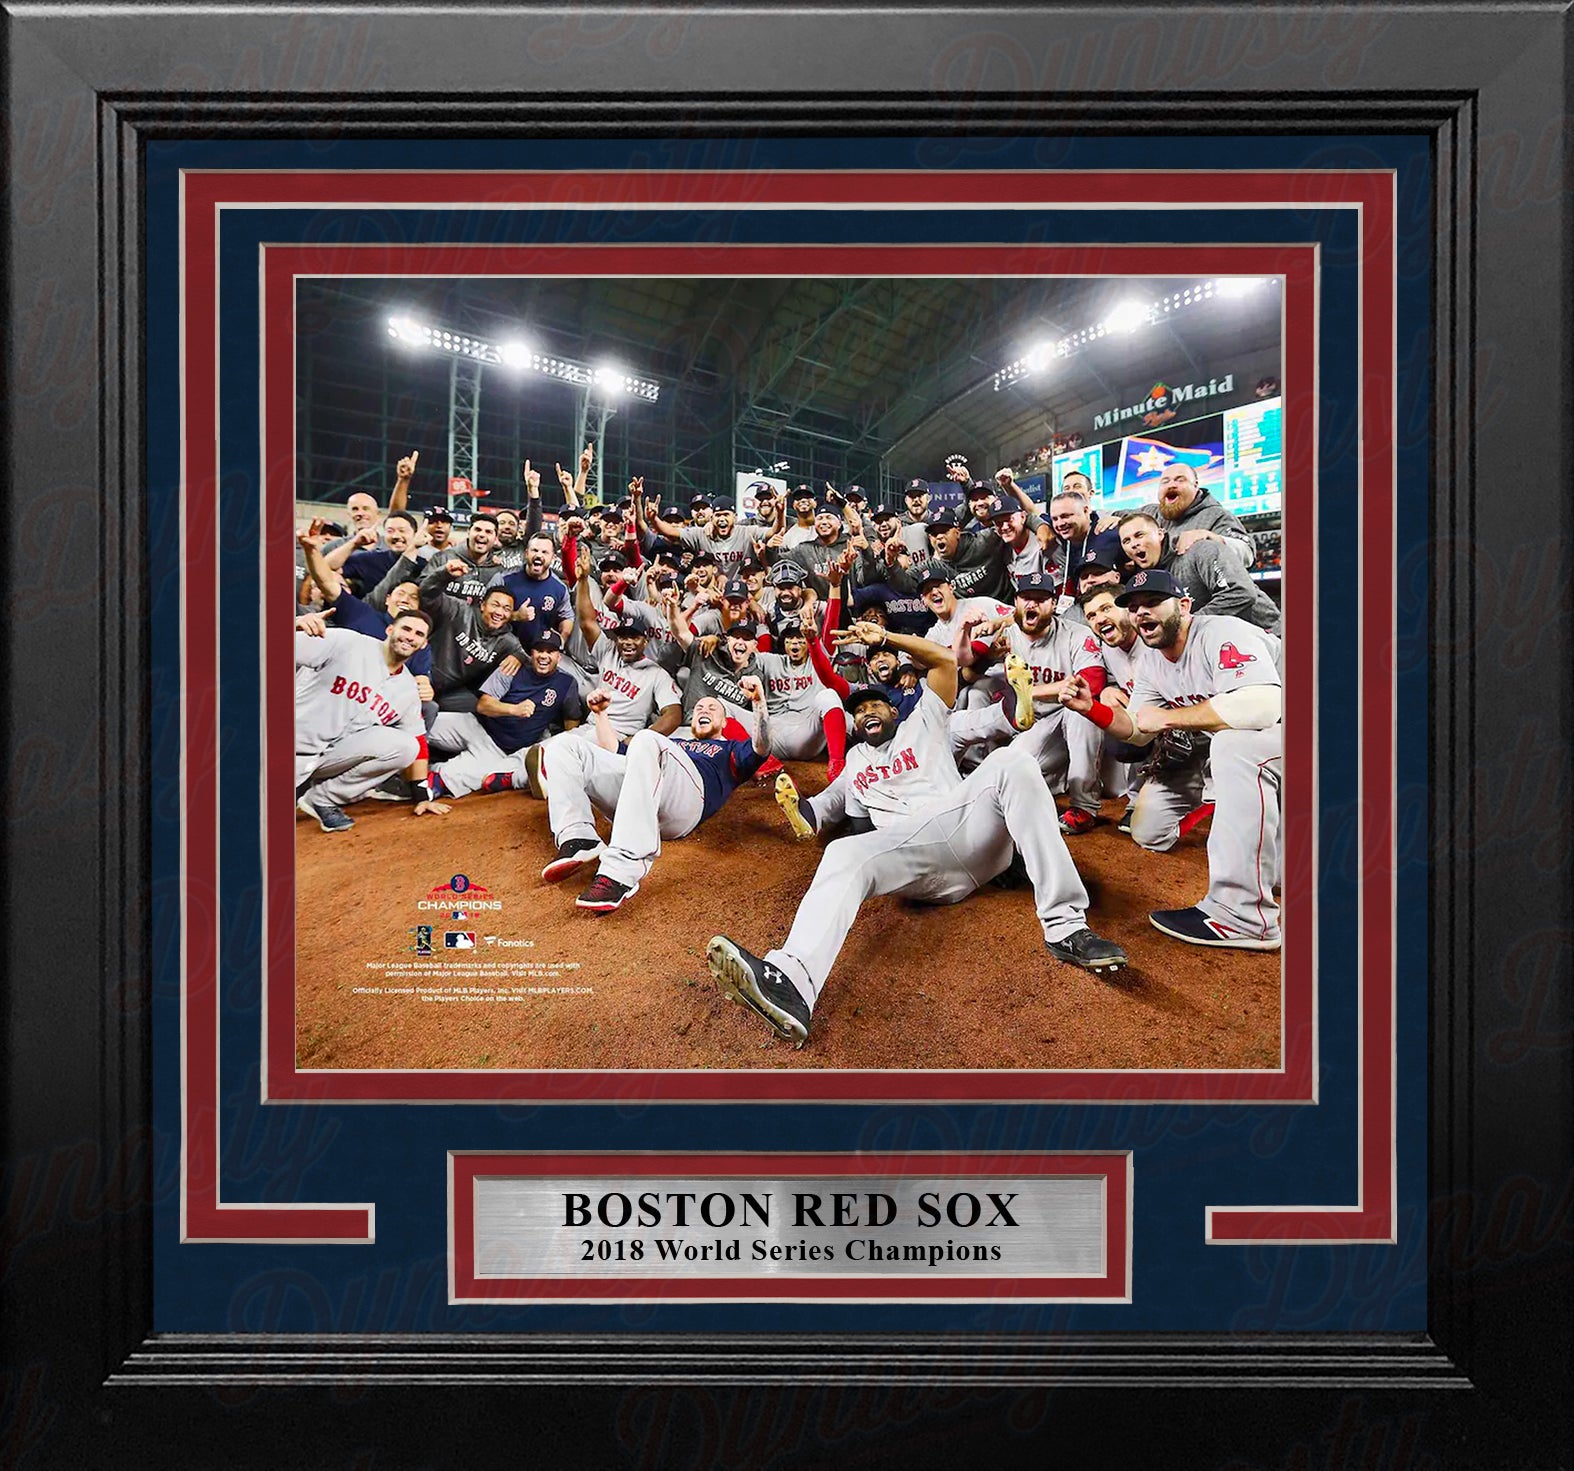 Boston Red Sox 2018 World Series Champions!